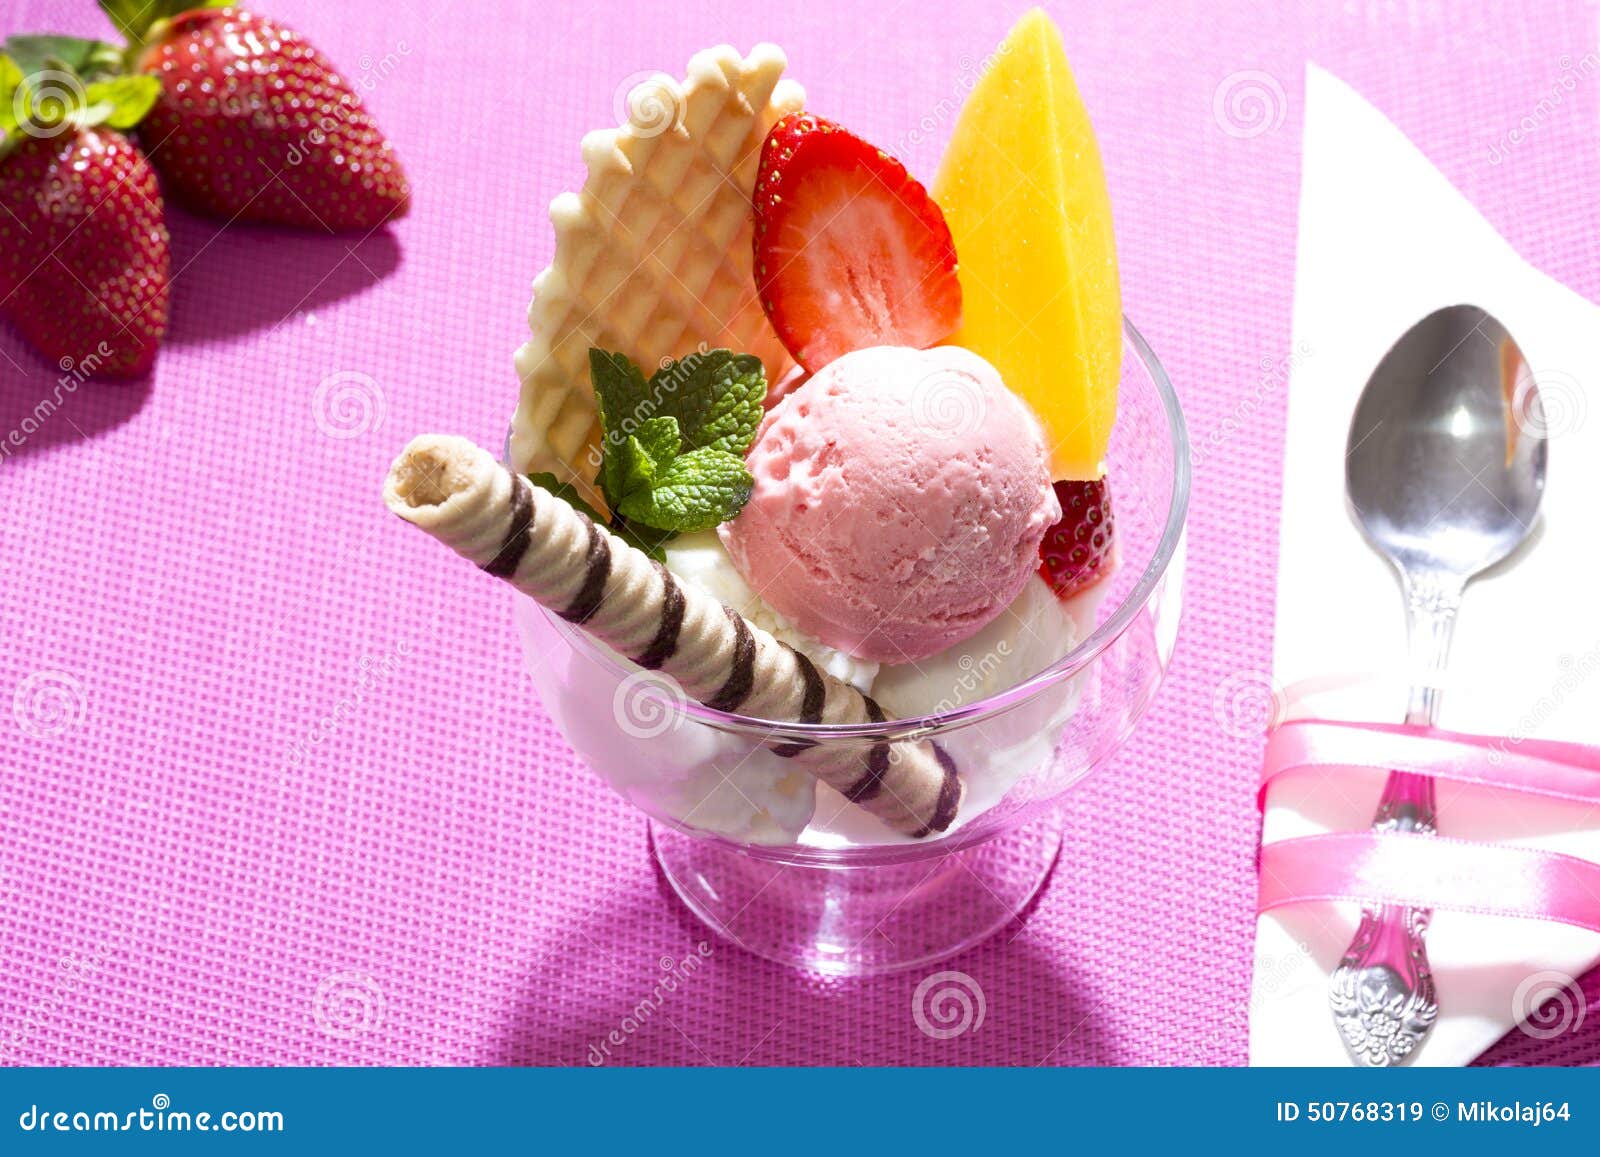 Strawberry Ice Cream Dessert Stock Image - Image of food, closeup: 50768319